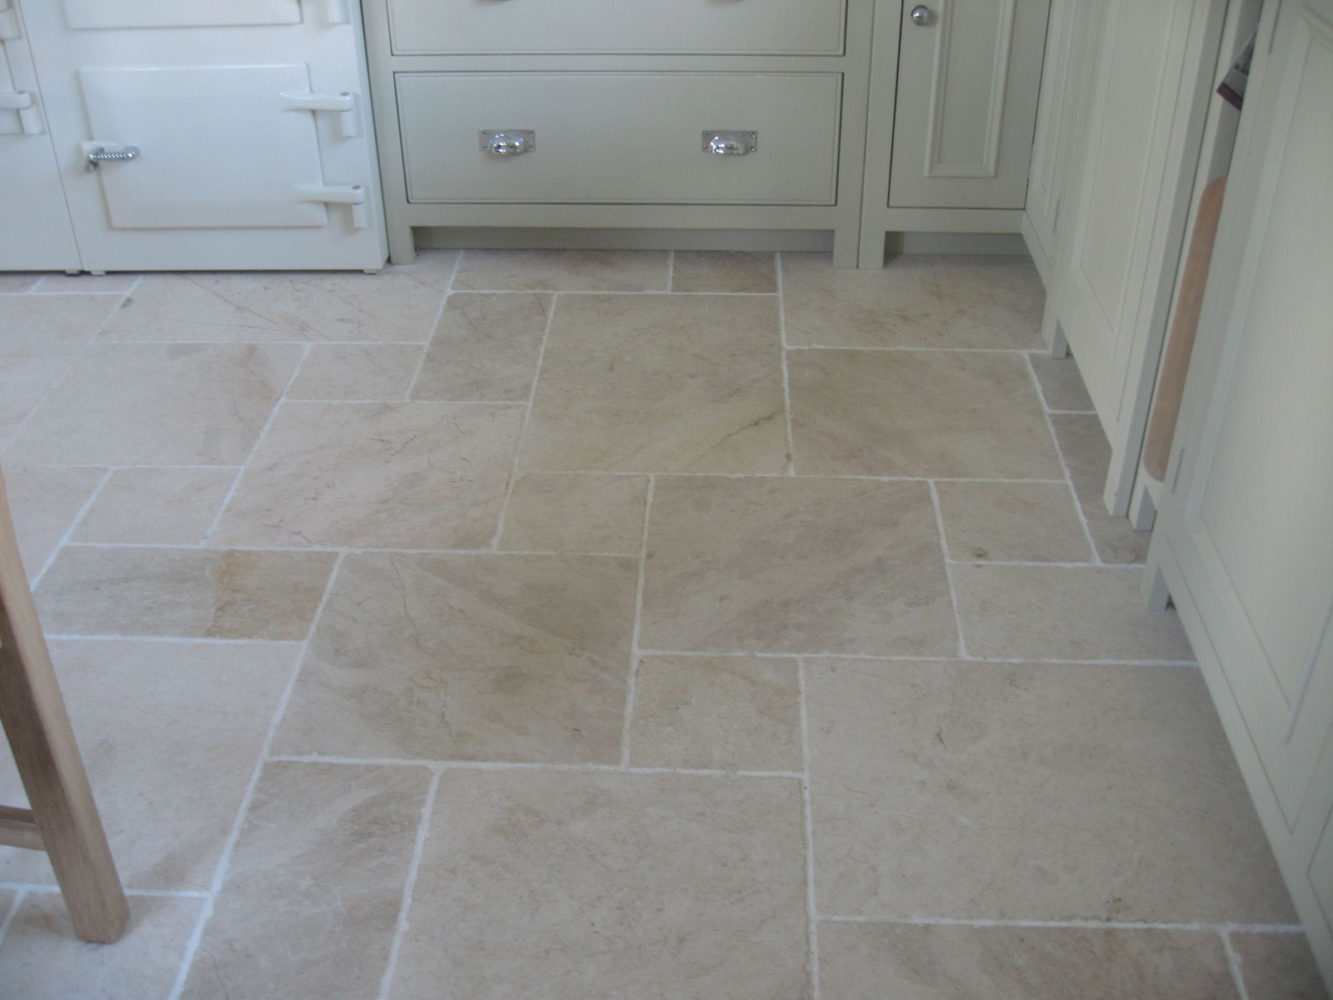 Heligon Antiqued Limestone Tiles I Dt, Grey Limestone Effect Floor Tiles